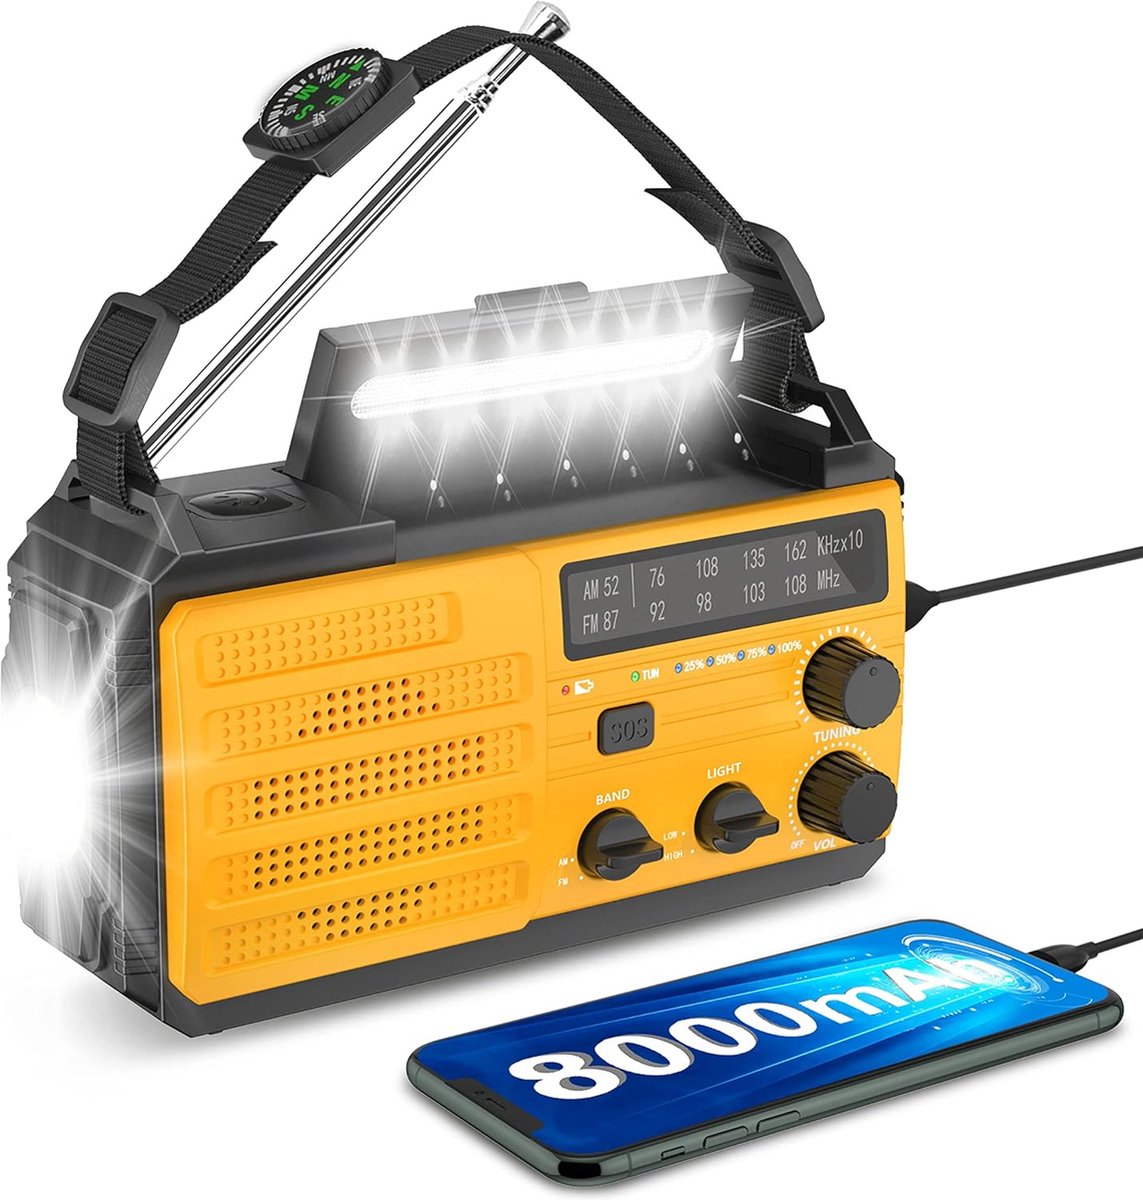 Noodradio op batterijen - All-in-One - 8000mAh Powerbank - Noodpakket - Survival kit - Opwindbare Dynamo Radio - SOS - USB - Kamperen en Outdoor